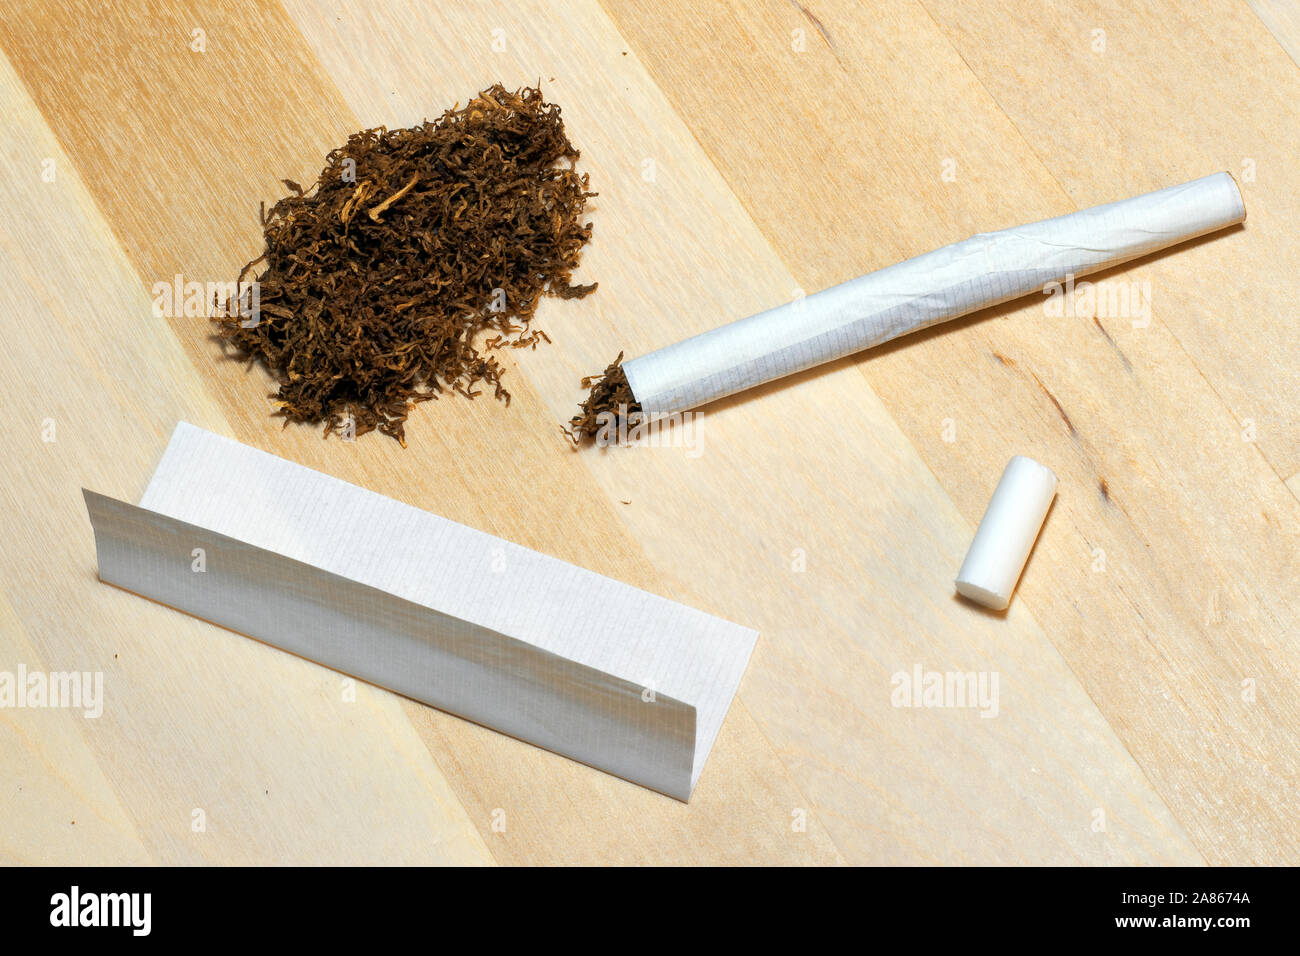 https://c8.alamy.com/compde/2a8674a/rauchen-zubehor-tabak-papier-einen-filter-fur-rolling-zigarette-auf-holz-hintergrund-2a8674a.jpg